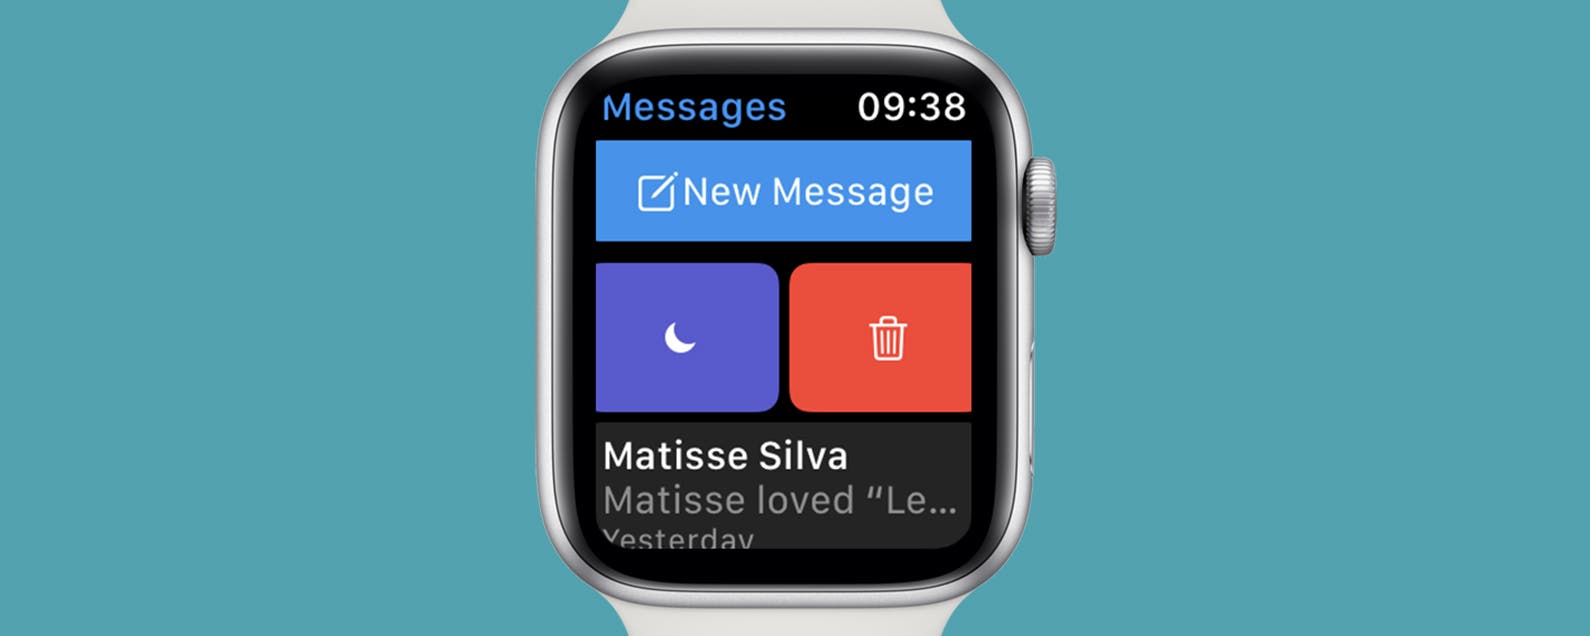 messages app apple watch face